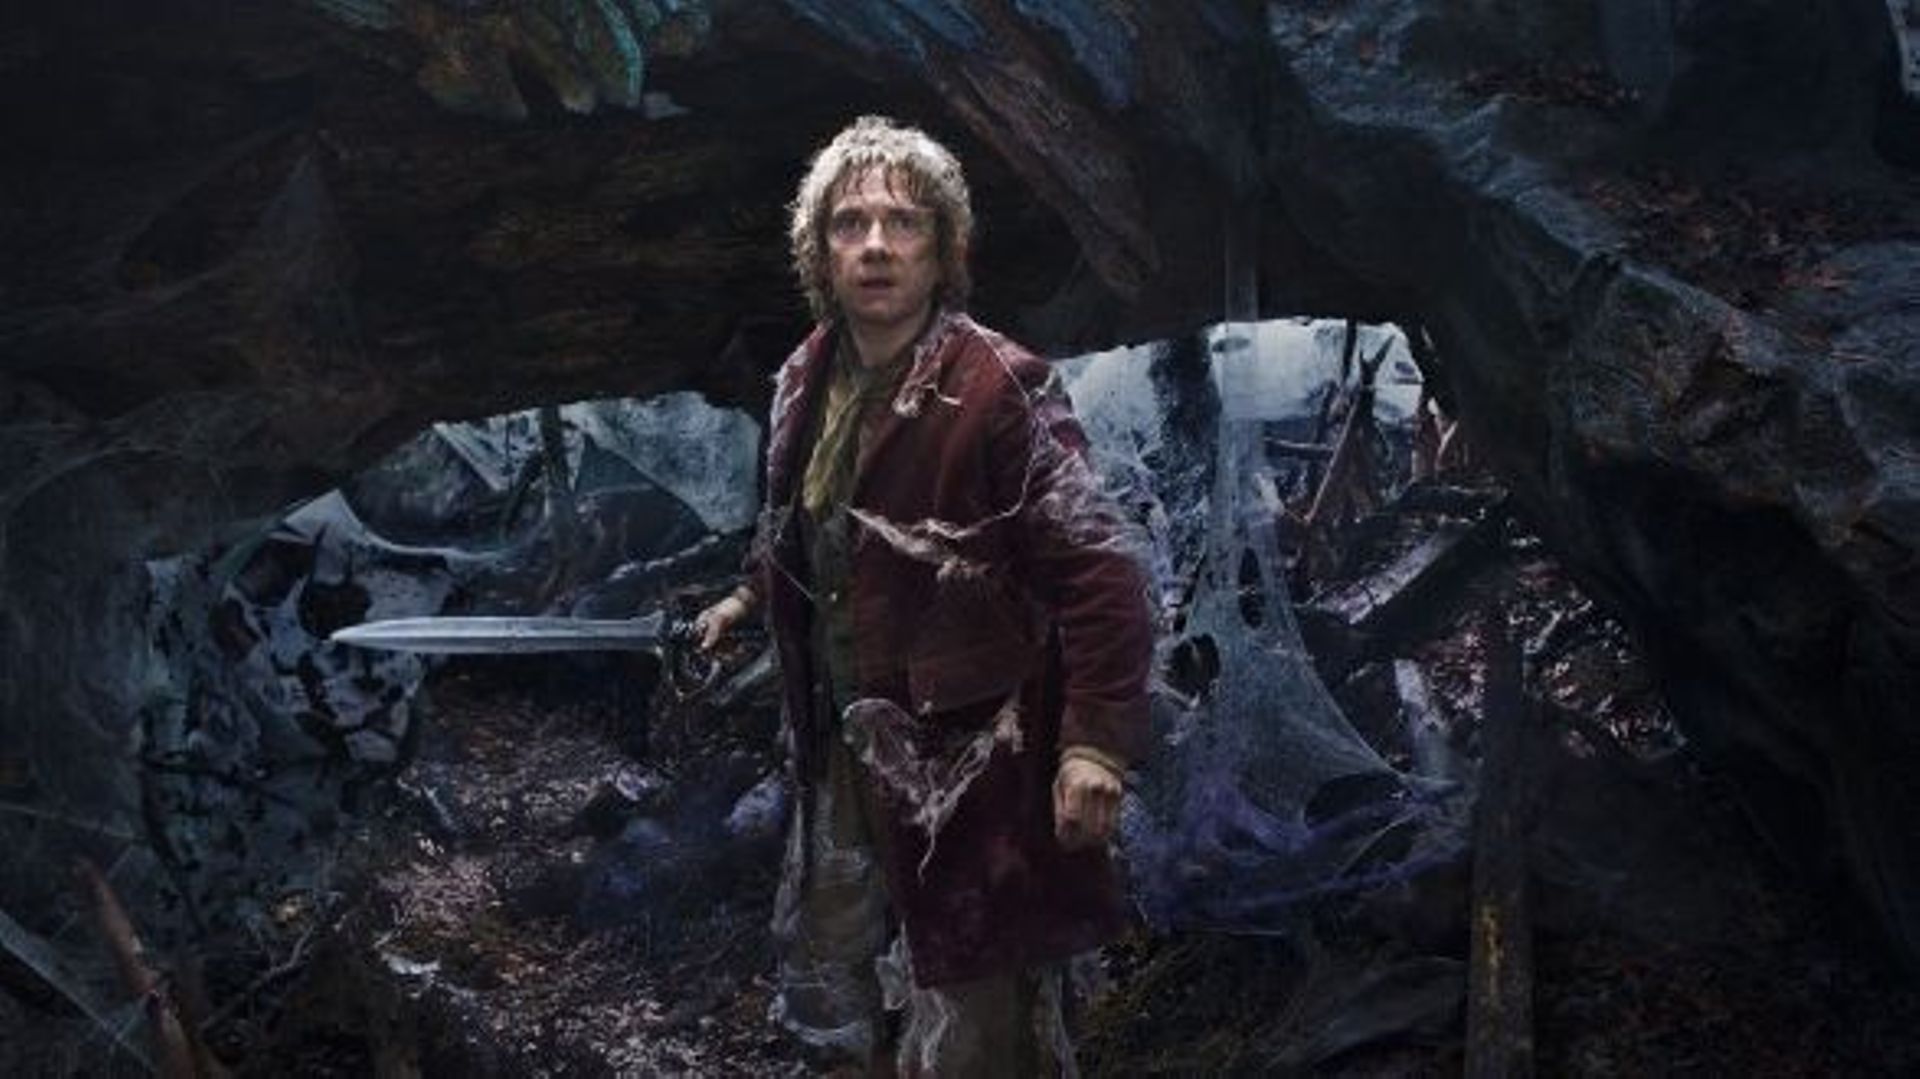 La trilogie "Le Hobbit" prendra fin en juillet 2014